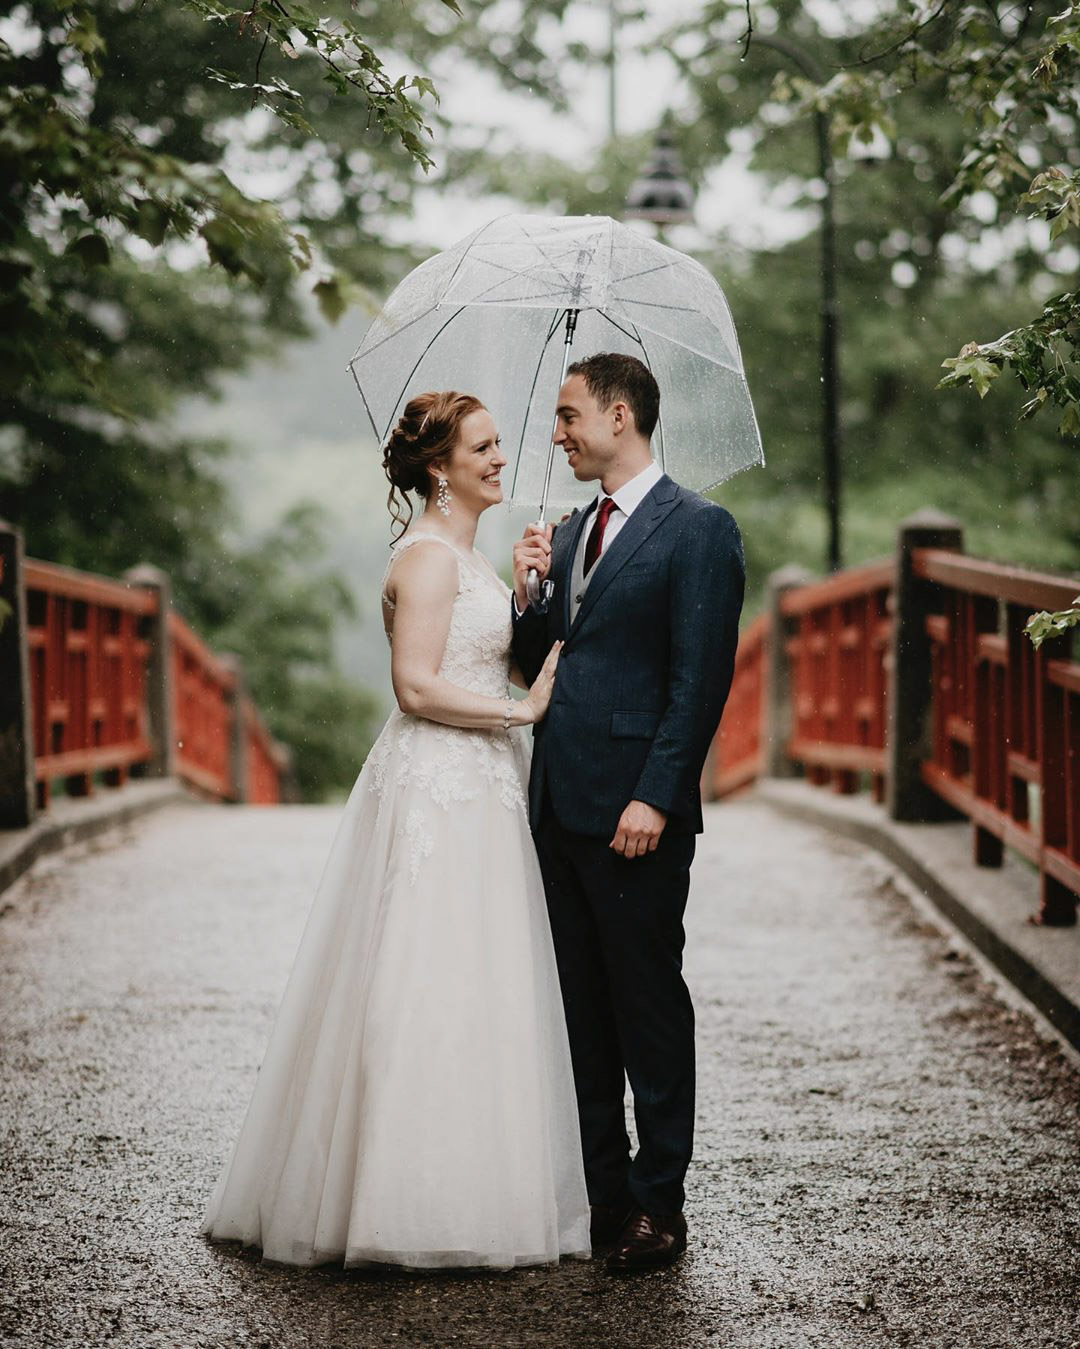 a wedding couple standing on a small bridge in their wedding attire sharing an umbrella